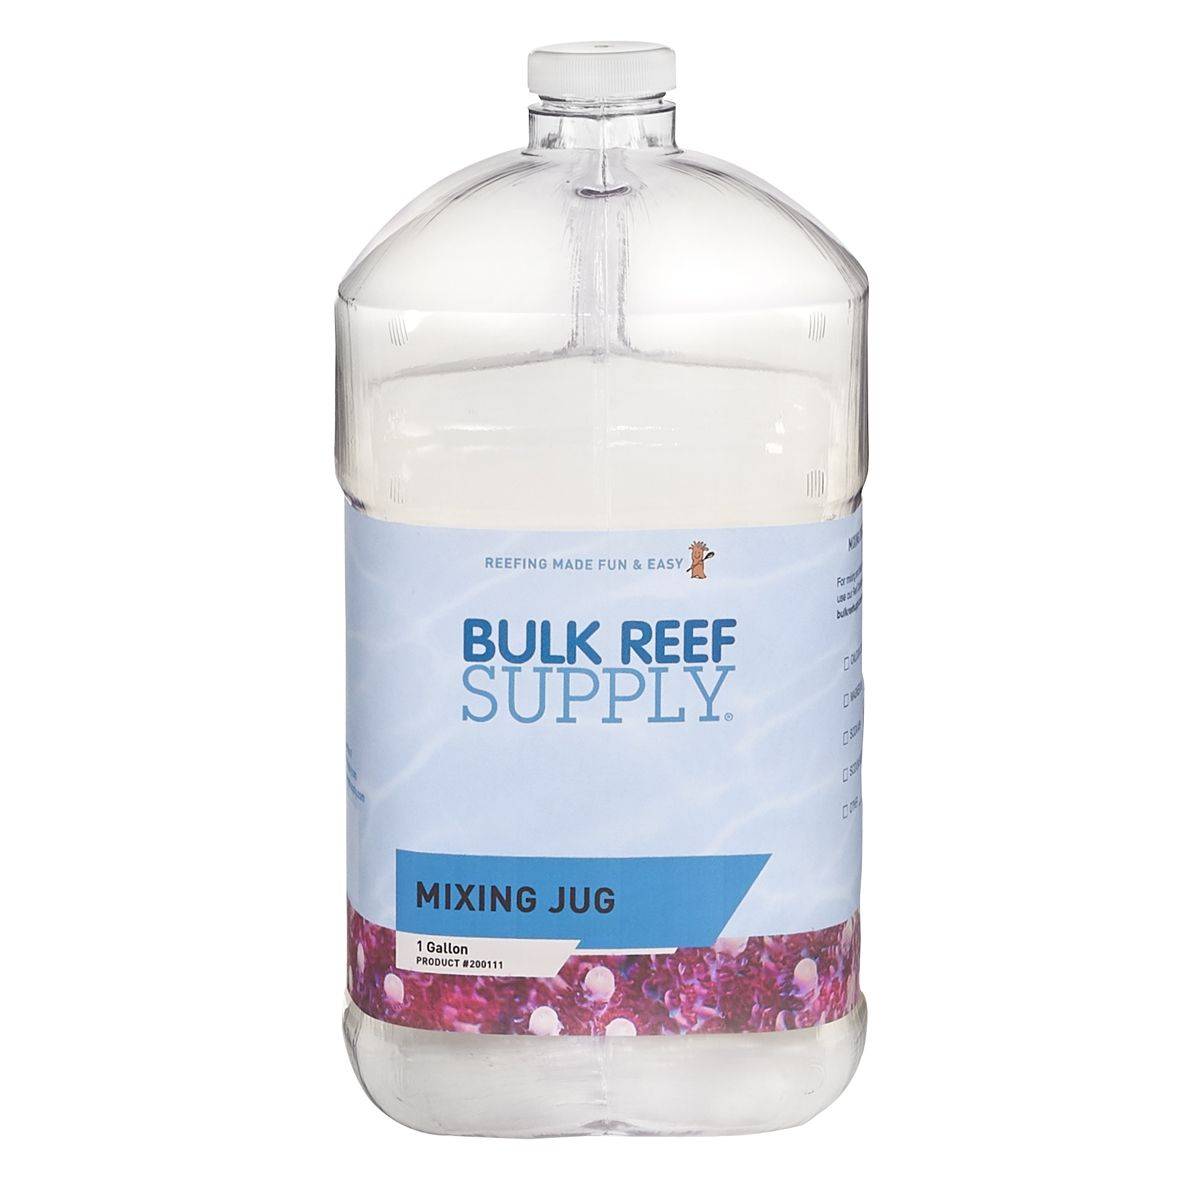 Mixing Jug - 1 Gallon Jug - Bulk Reef Supply